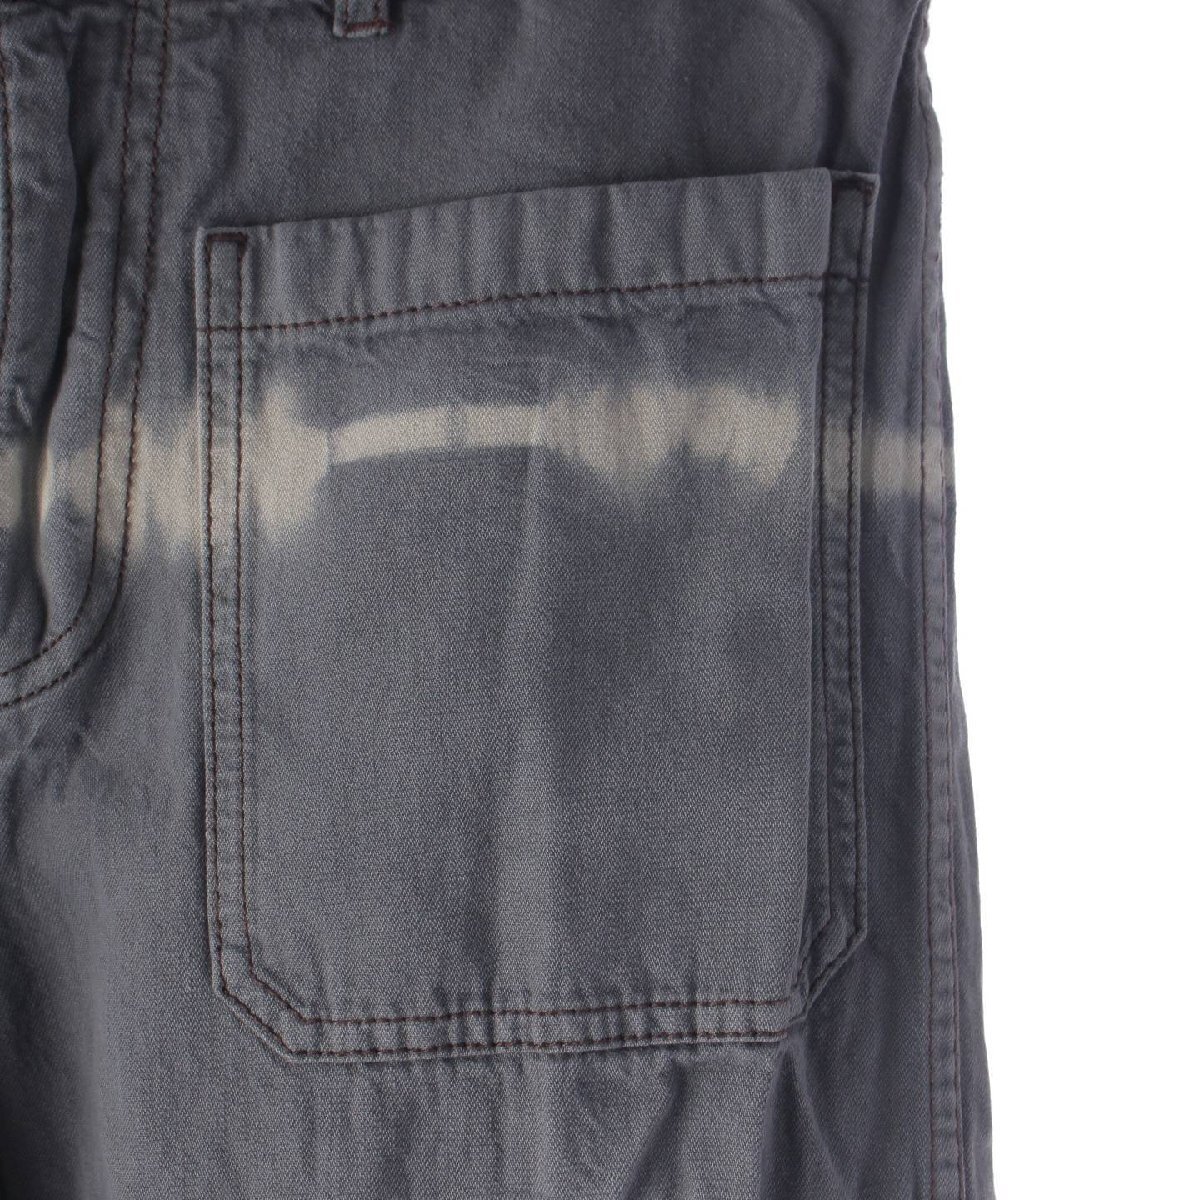 [ Dior ]DIOR Thai large stripe Denim pants jeans bottoms 122P30A3372 blue 34 [ used ][ regular goods guarantee ]204319